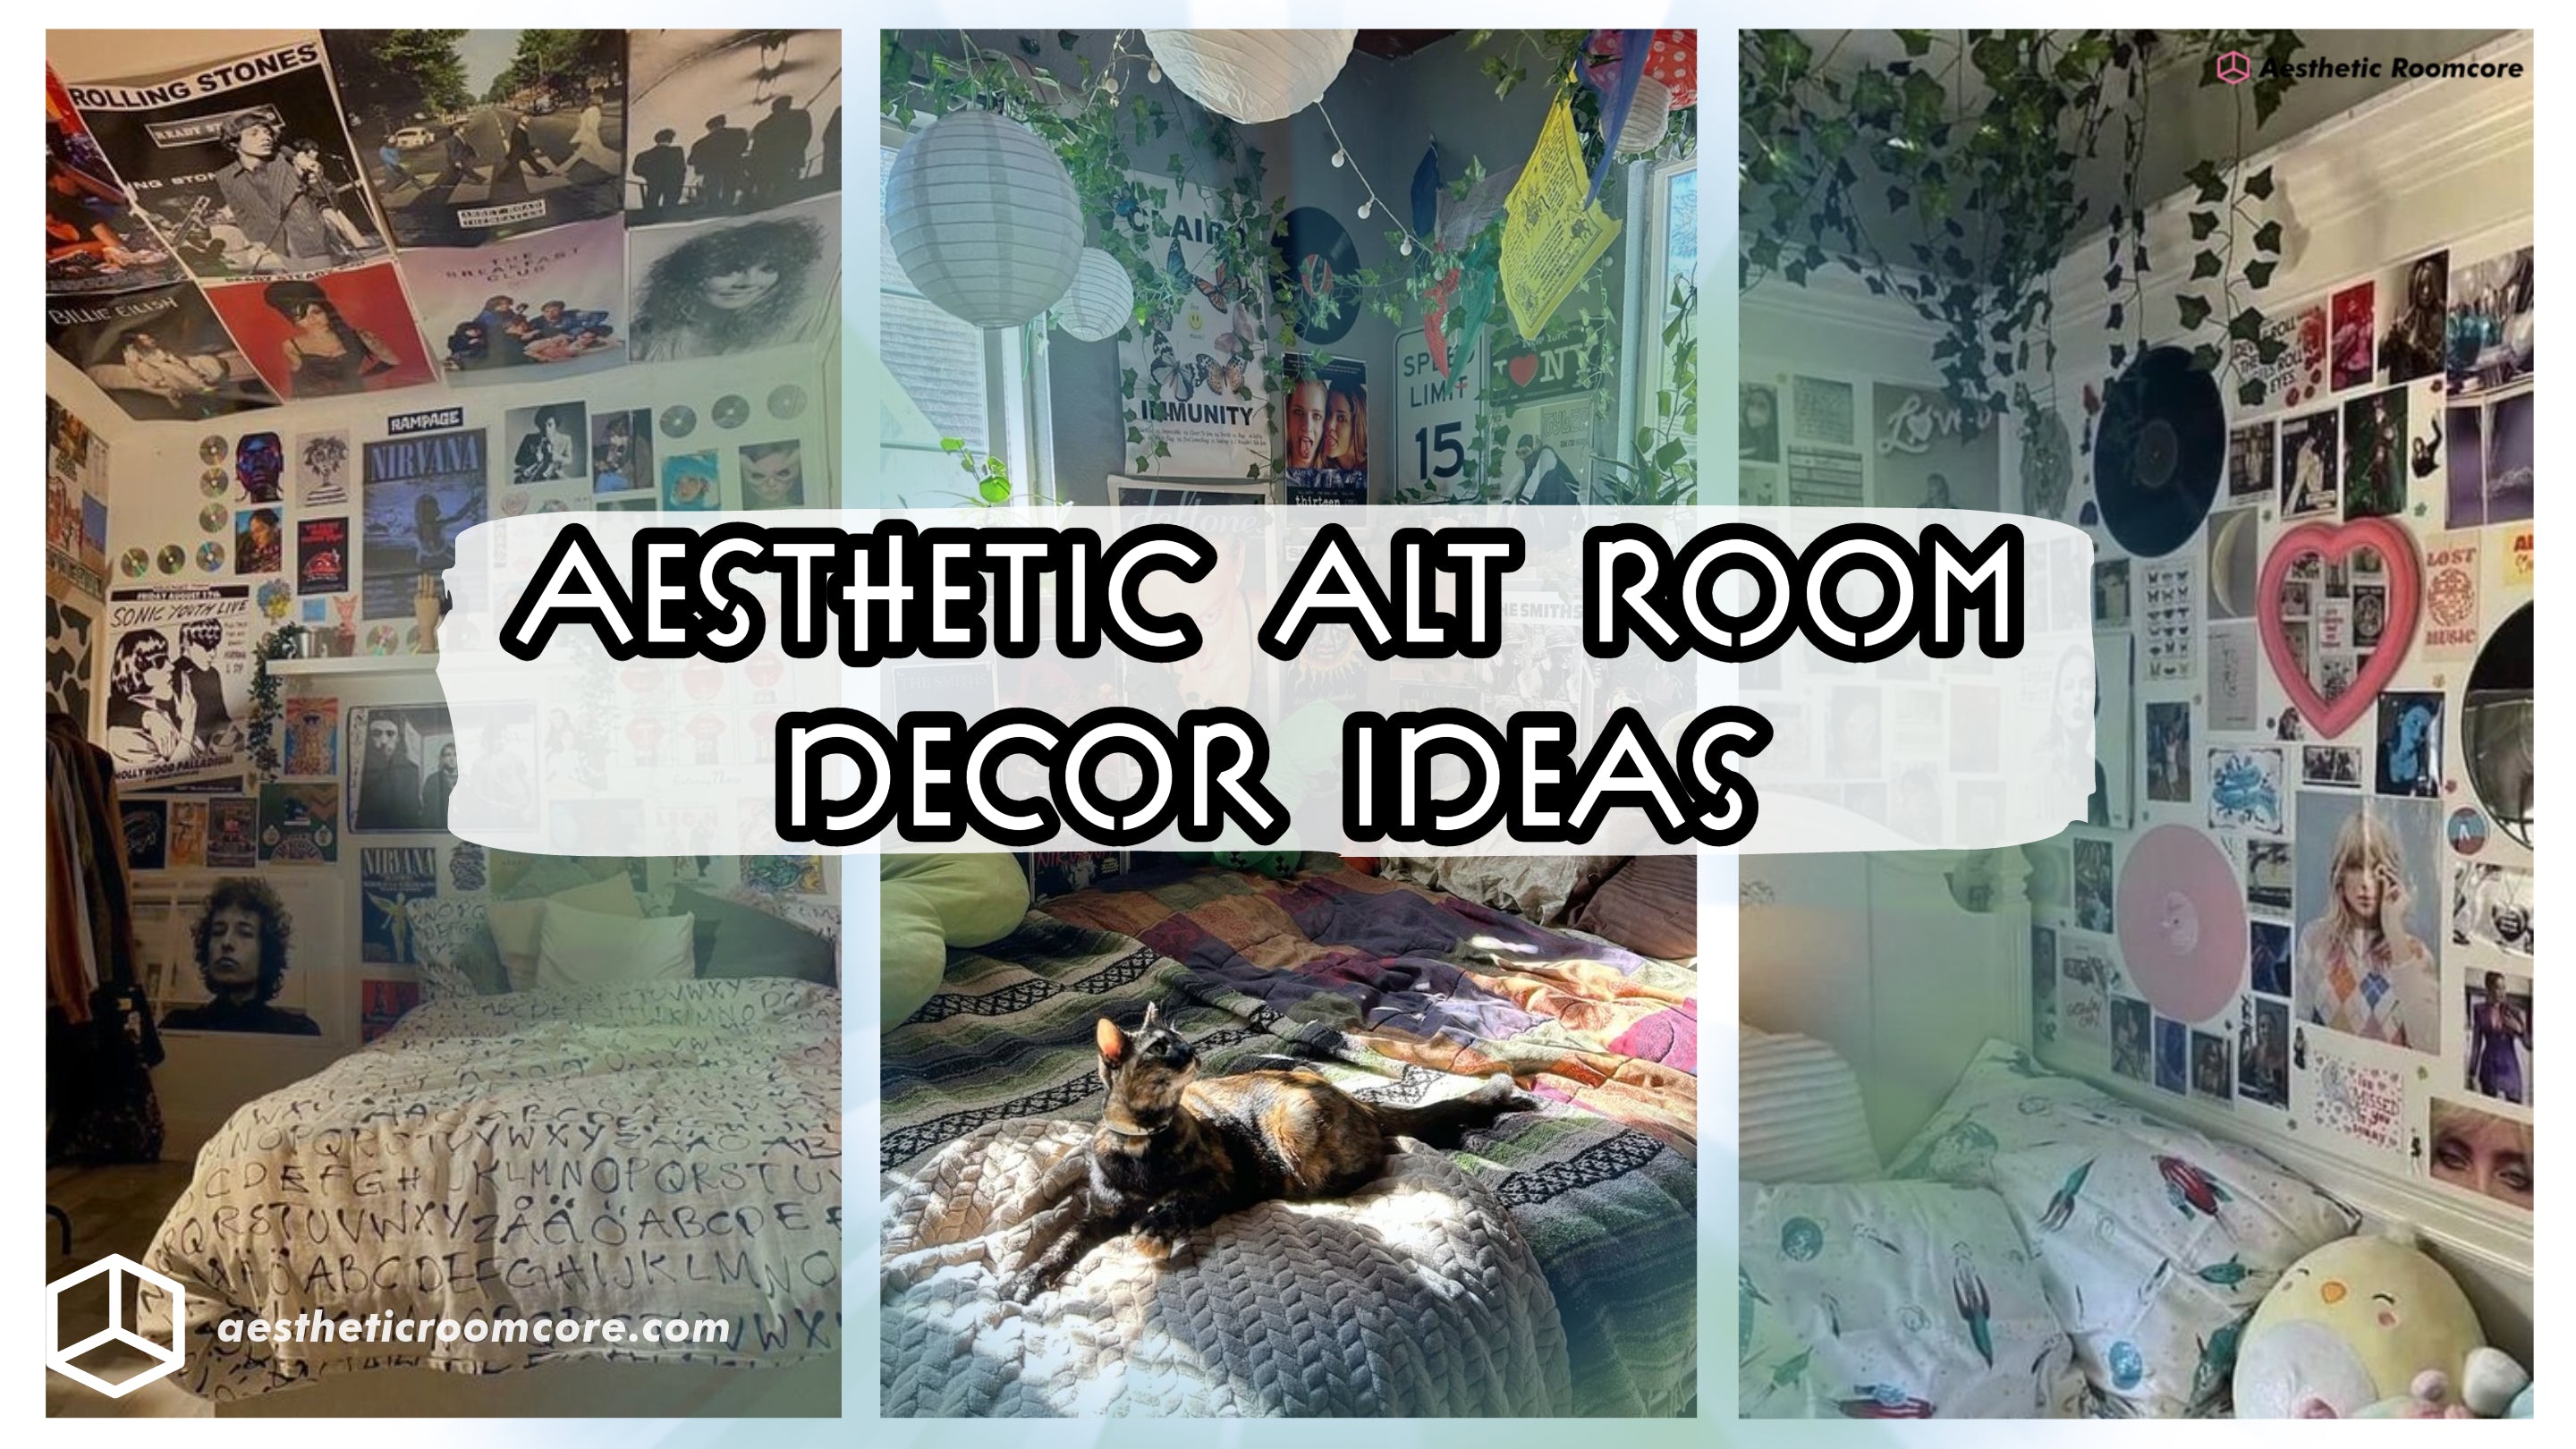 Aesthetic Roomcore  Aesthetic Room Decor + Dorm Room Accessories